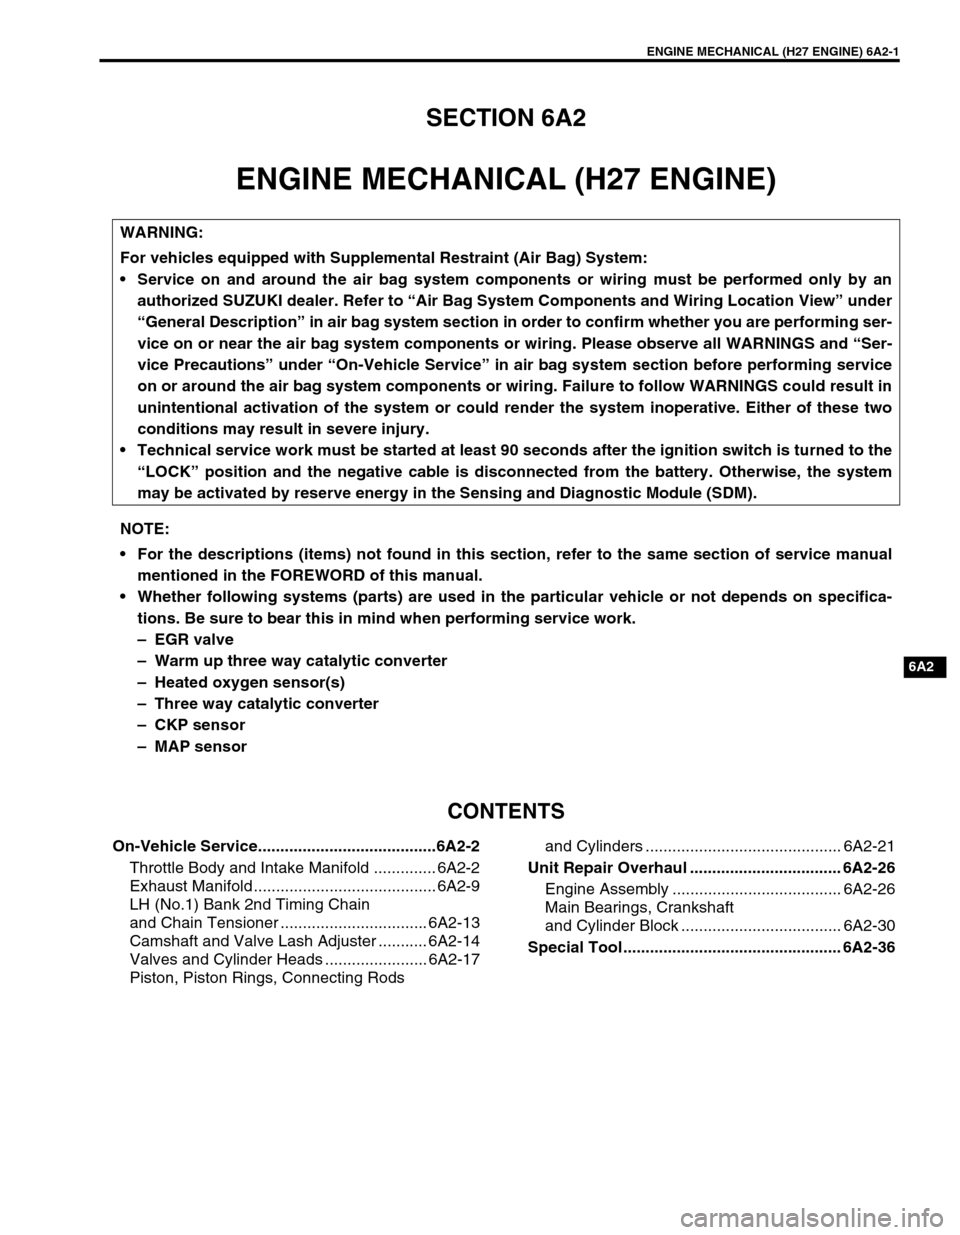 SUZUKI GRAND VITARA 2001 2.G Manual Online ENGINE MECHANICAL (H27 ENGINE) 6A2-1
6A2
SECTION 6A2
ENGINE MECHANICAL (H27 ENGINE)
CONTENTS
On-Vehicle Service........................................6A2-2
Throttle Body and Intake Manifold .........